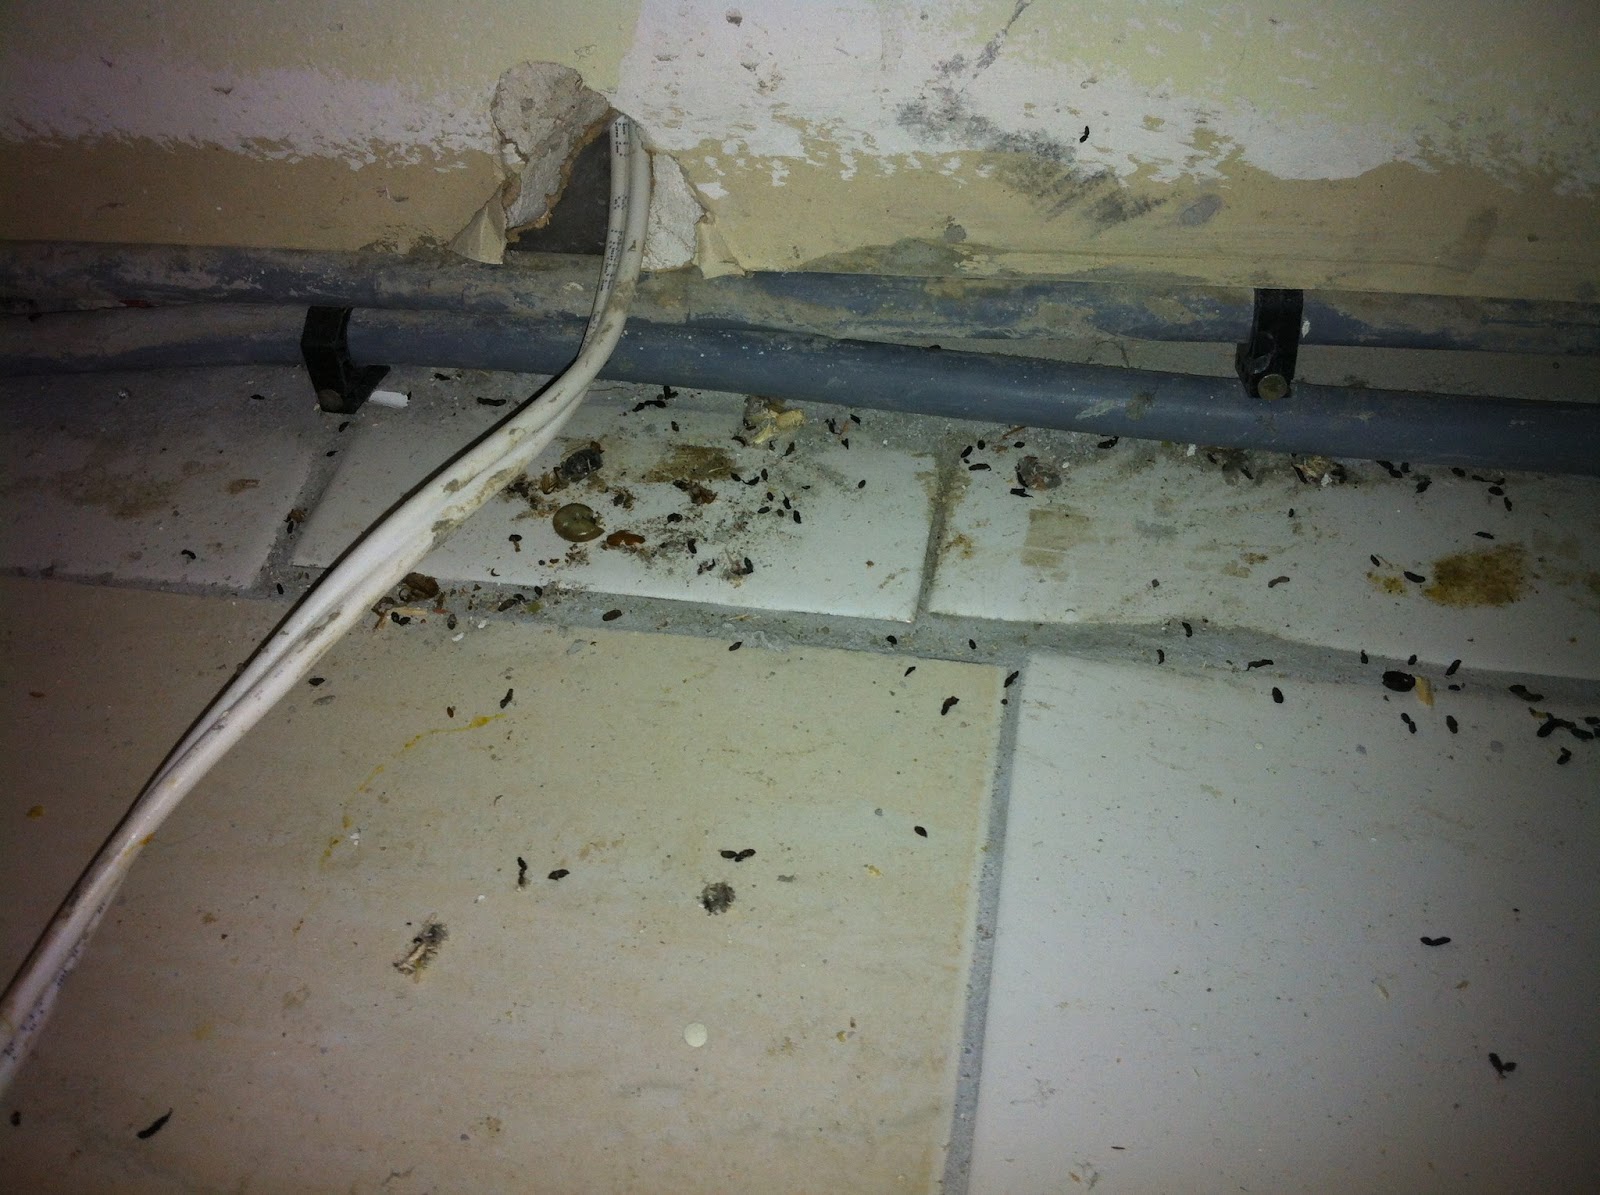 rodent control Surrey - rat exterminator surrey- Ideal Pest Control